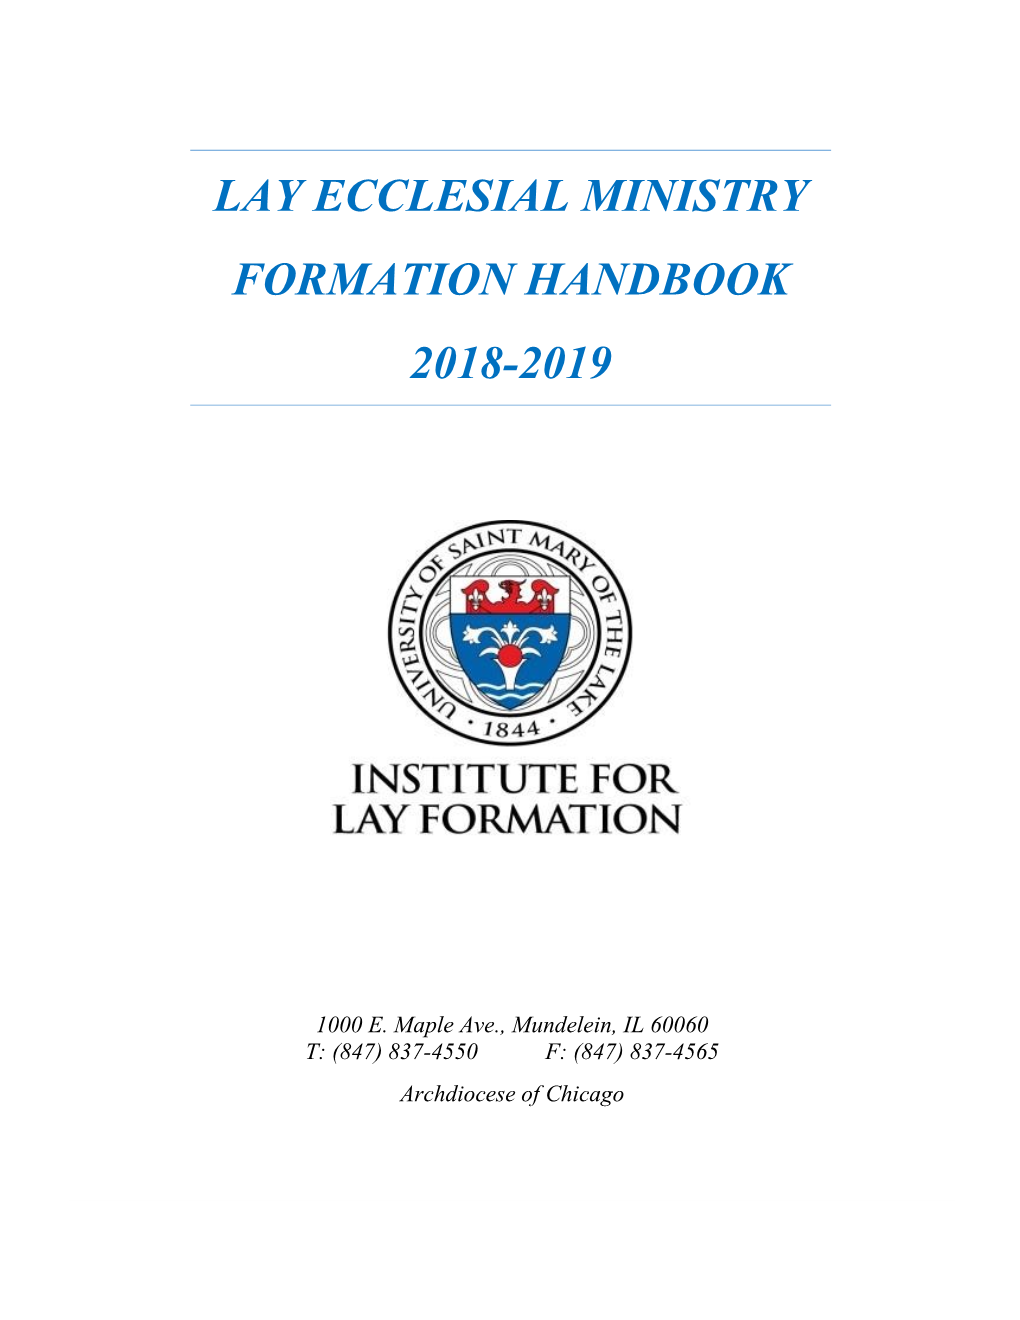 Lay Ecclesial Miistry Formation Handbook